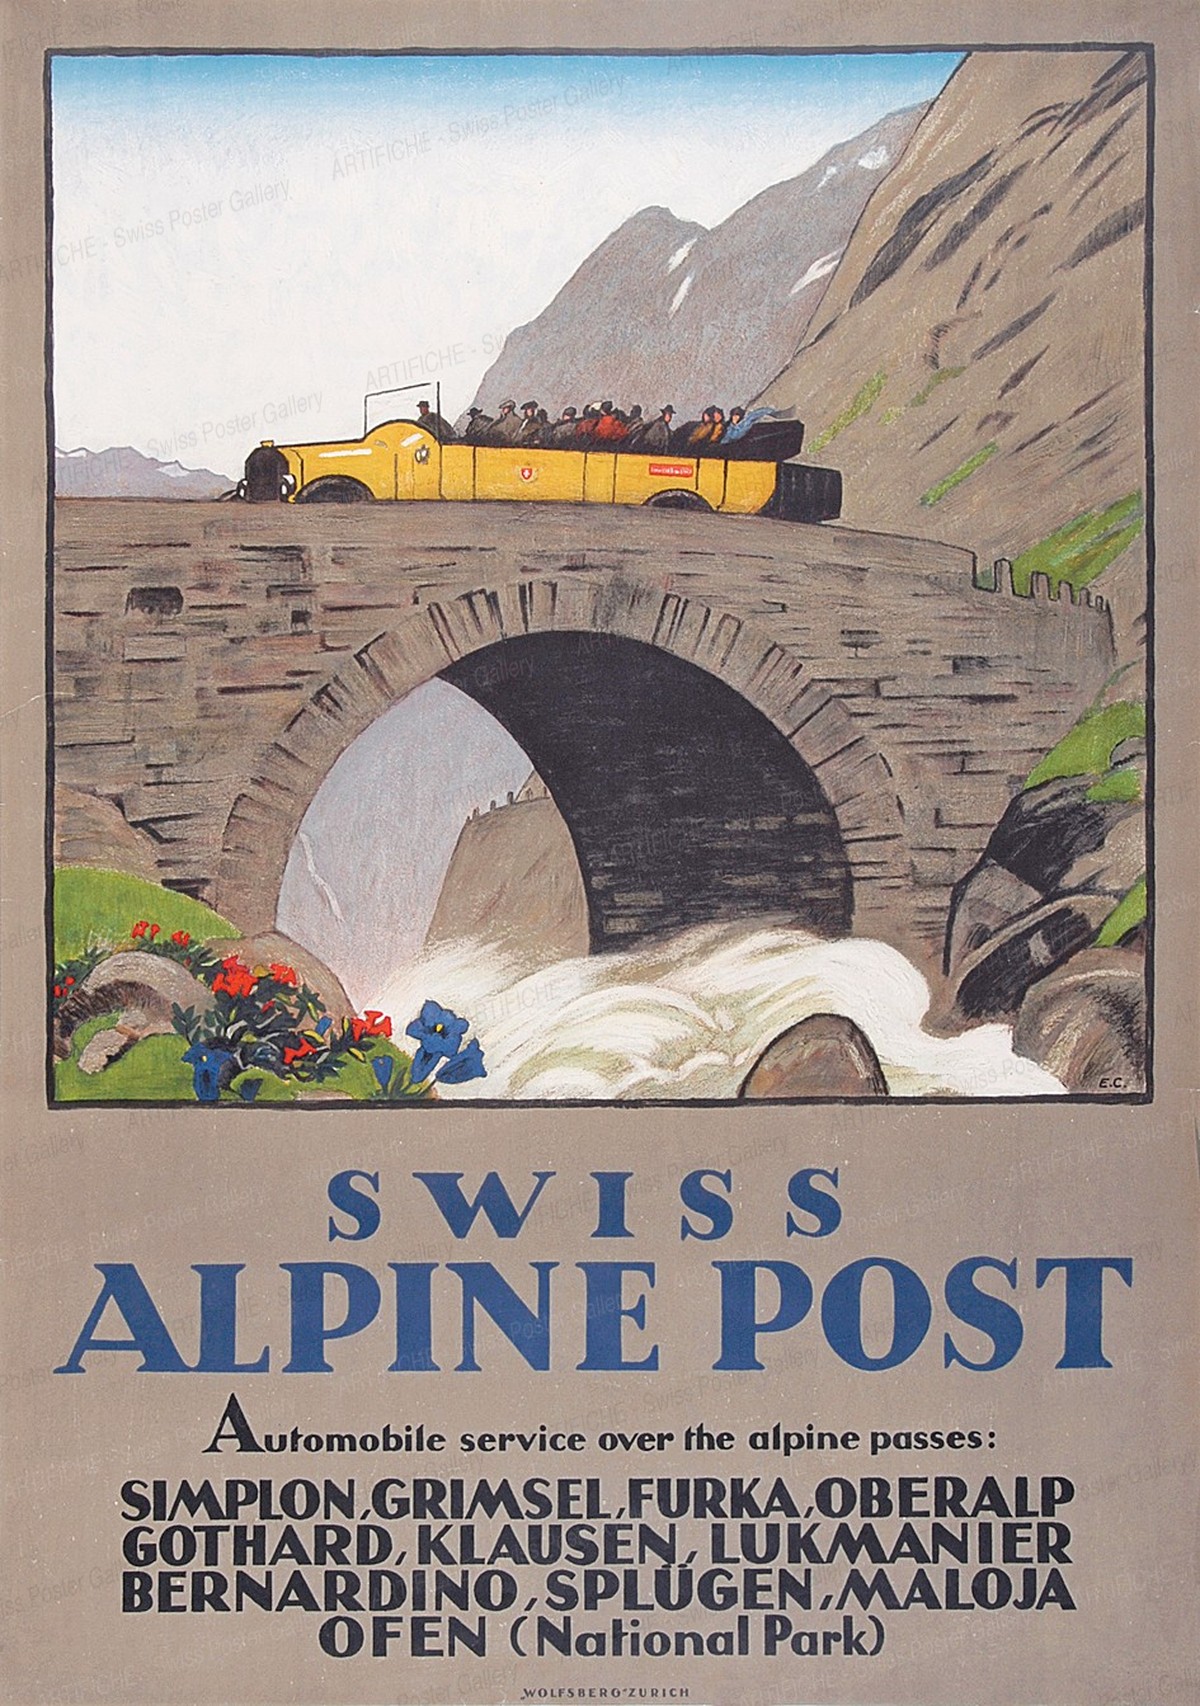 SWISS ALPINE POST – Automobile service over the alpine passes, Emil Cardinaux